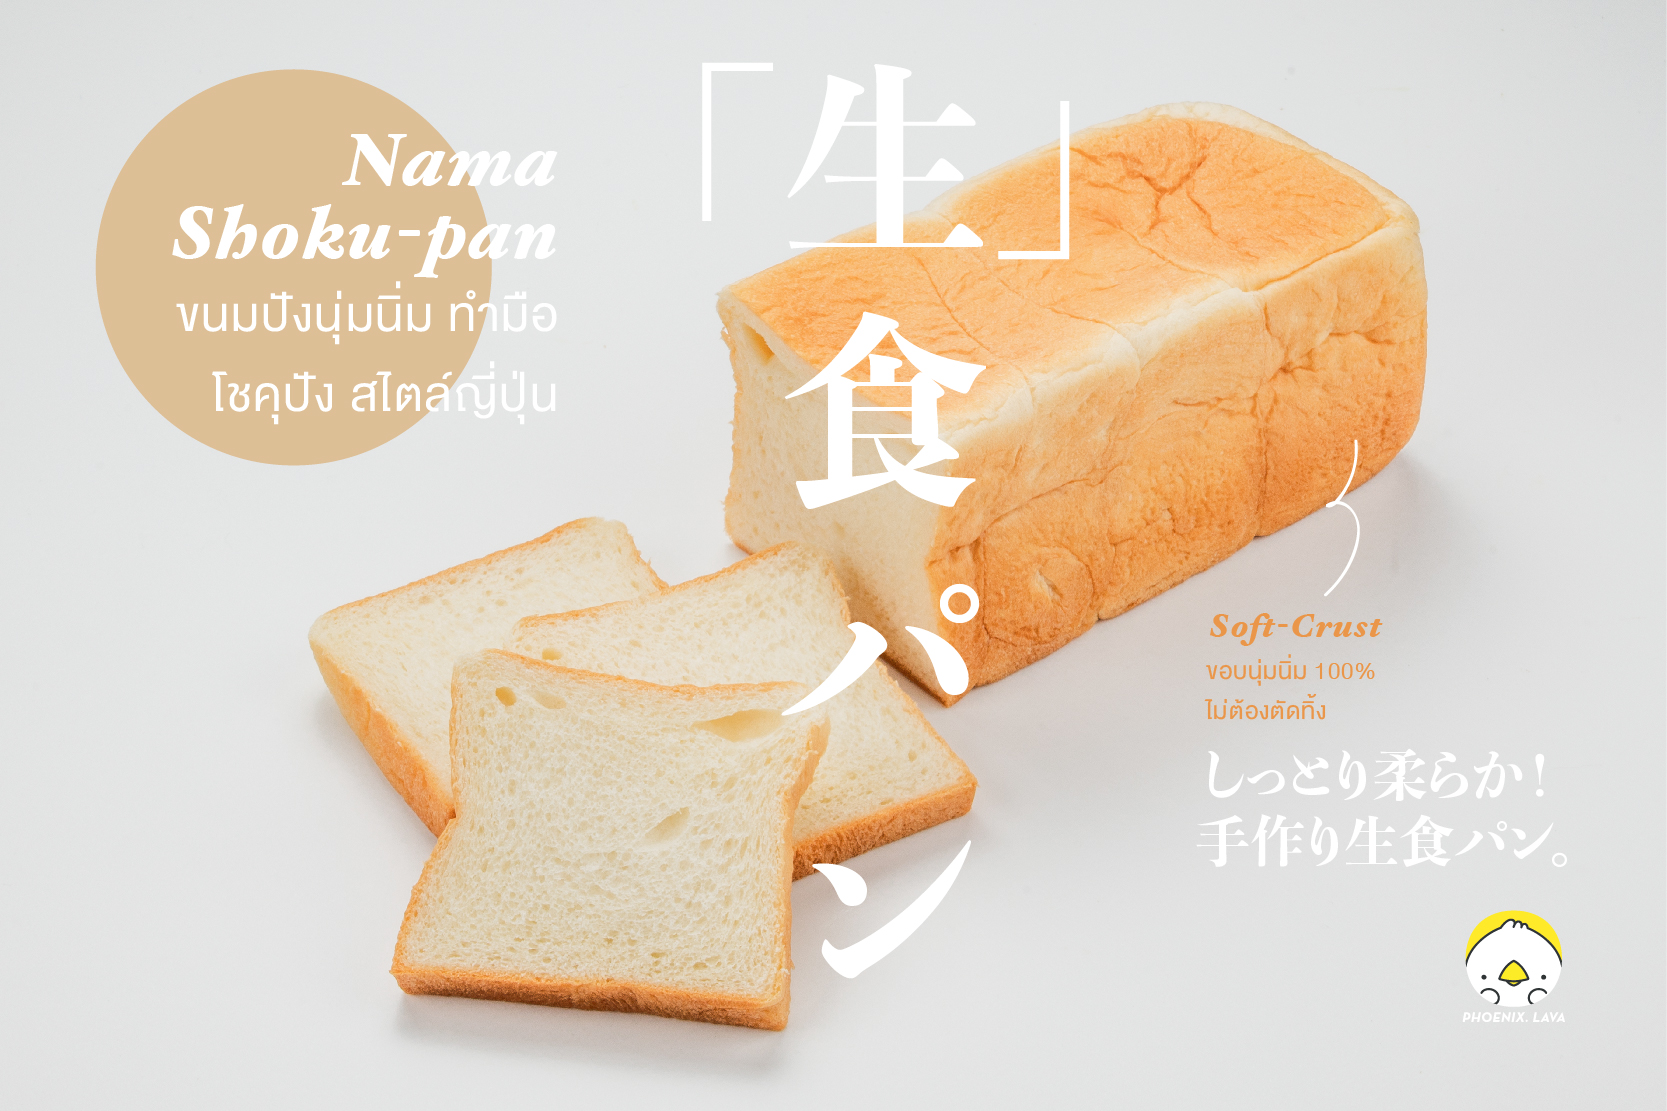 Shokupan  |  なま食パン  |   คือ ขนมปังญี่ปุ่น ทำสด สัญชาติญี่ปุ่น |  โชคุปัง คือ